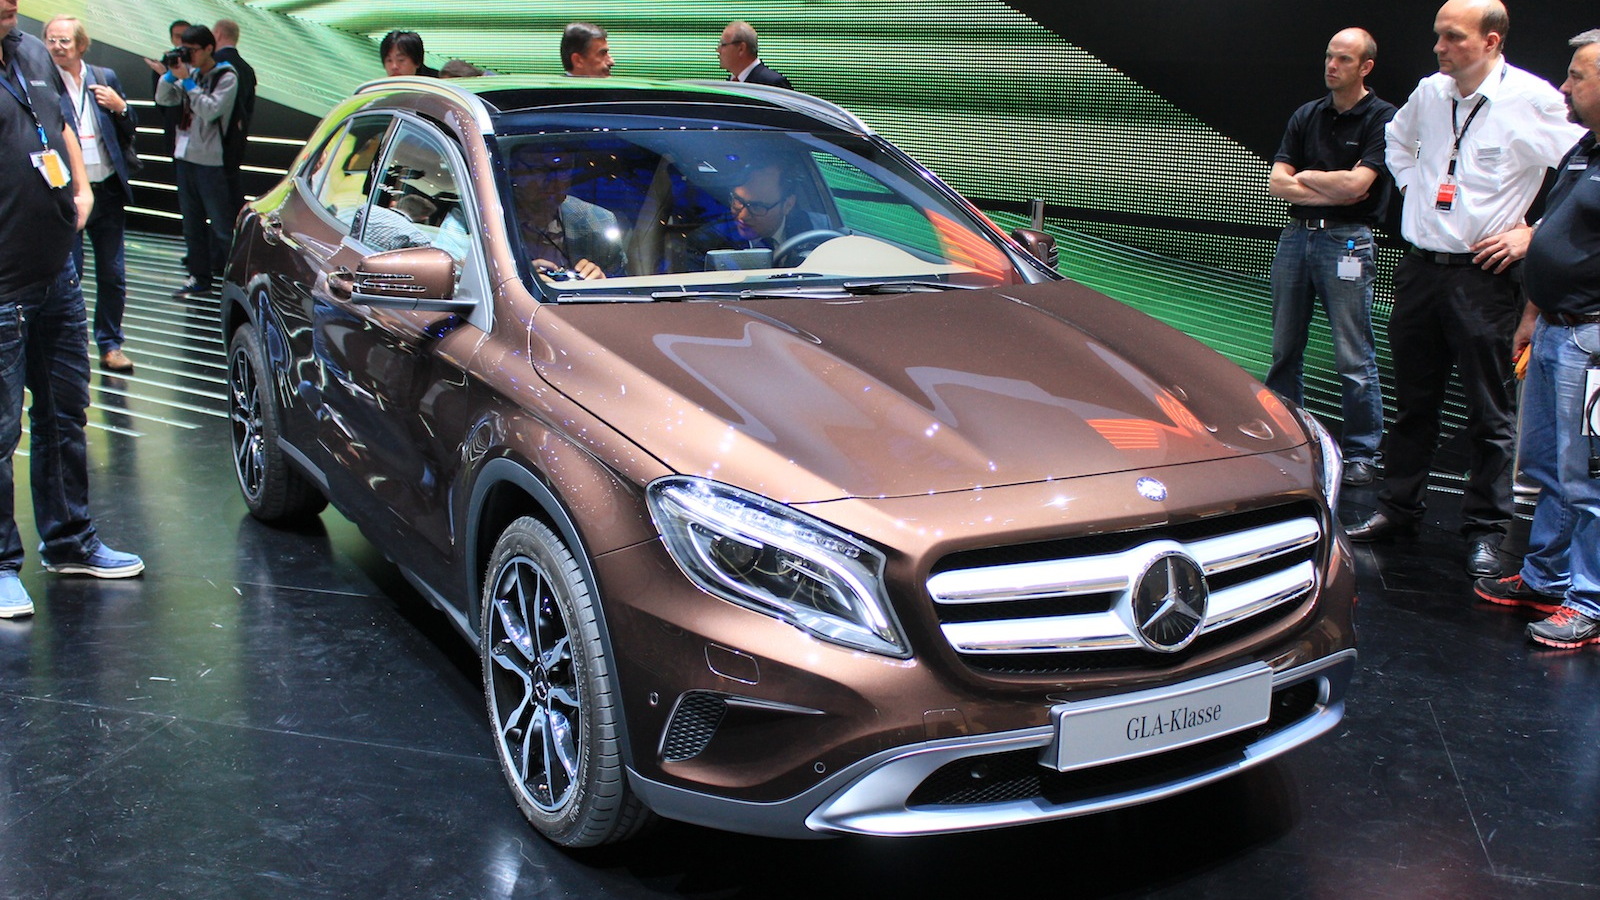 2015 Mercedes-Benz GLA Class, 2013 Frankfurt Auto Show